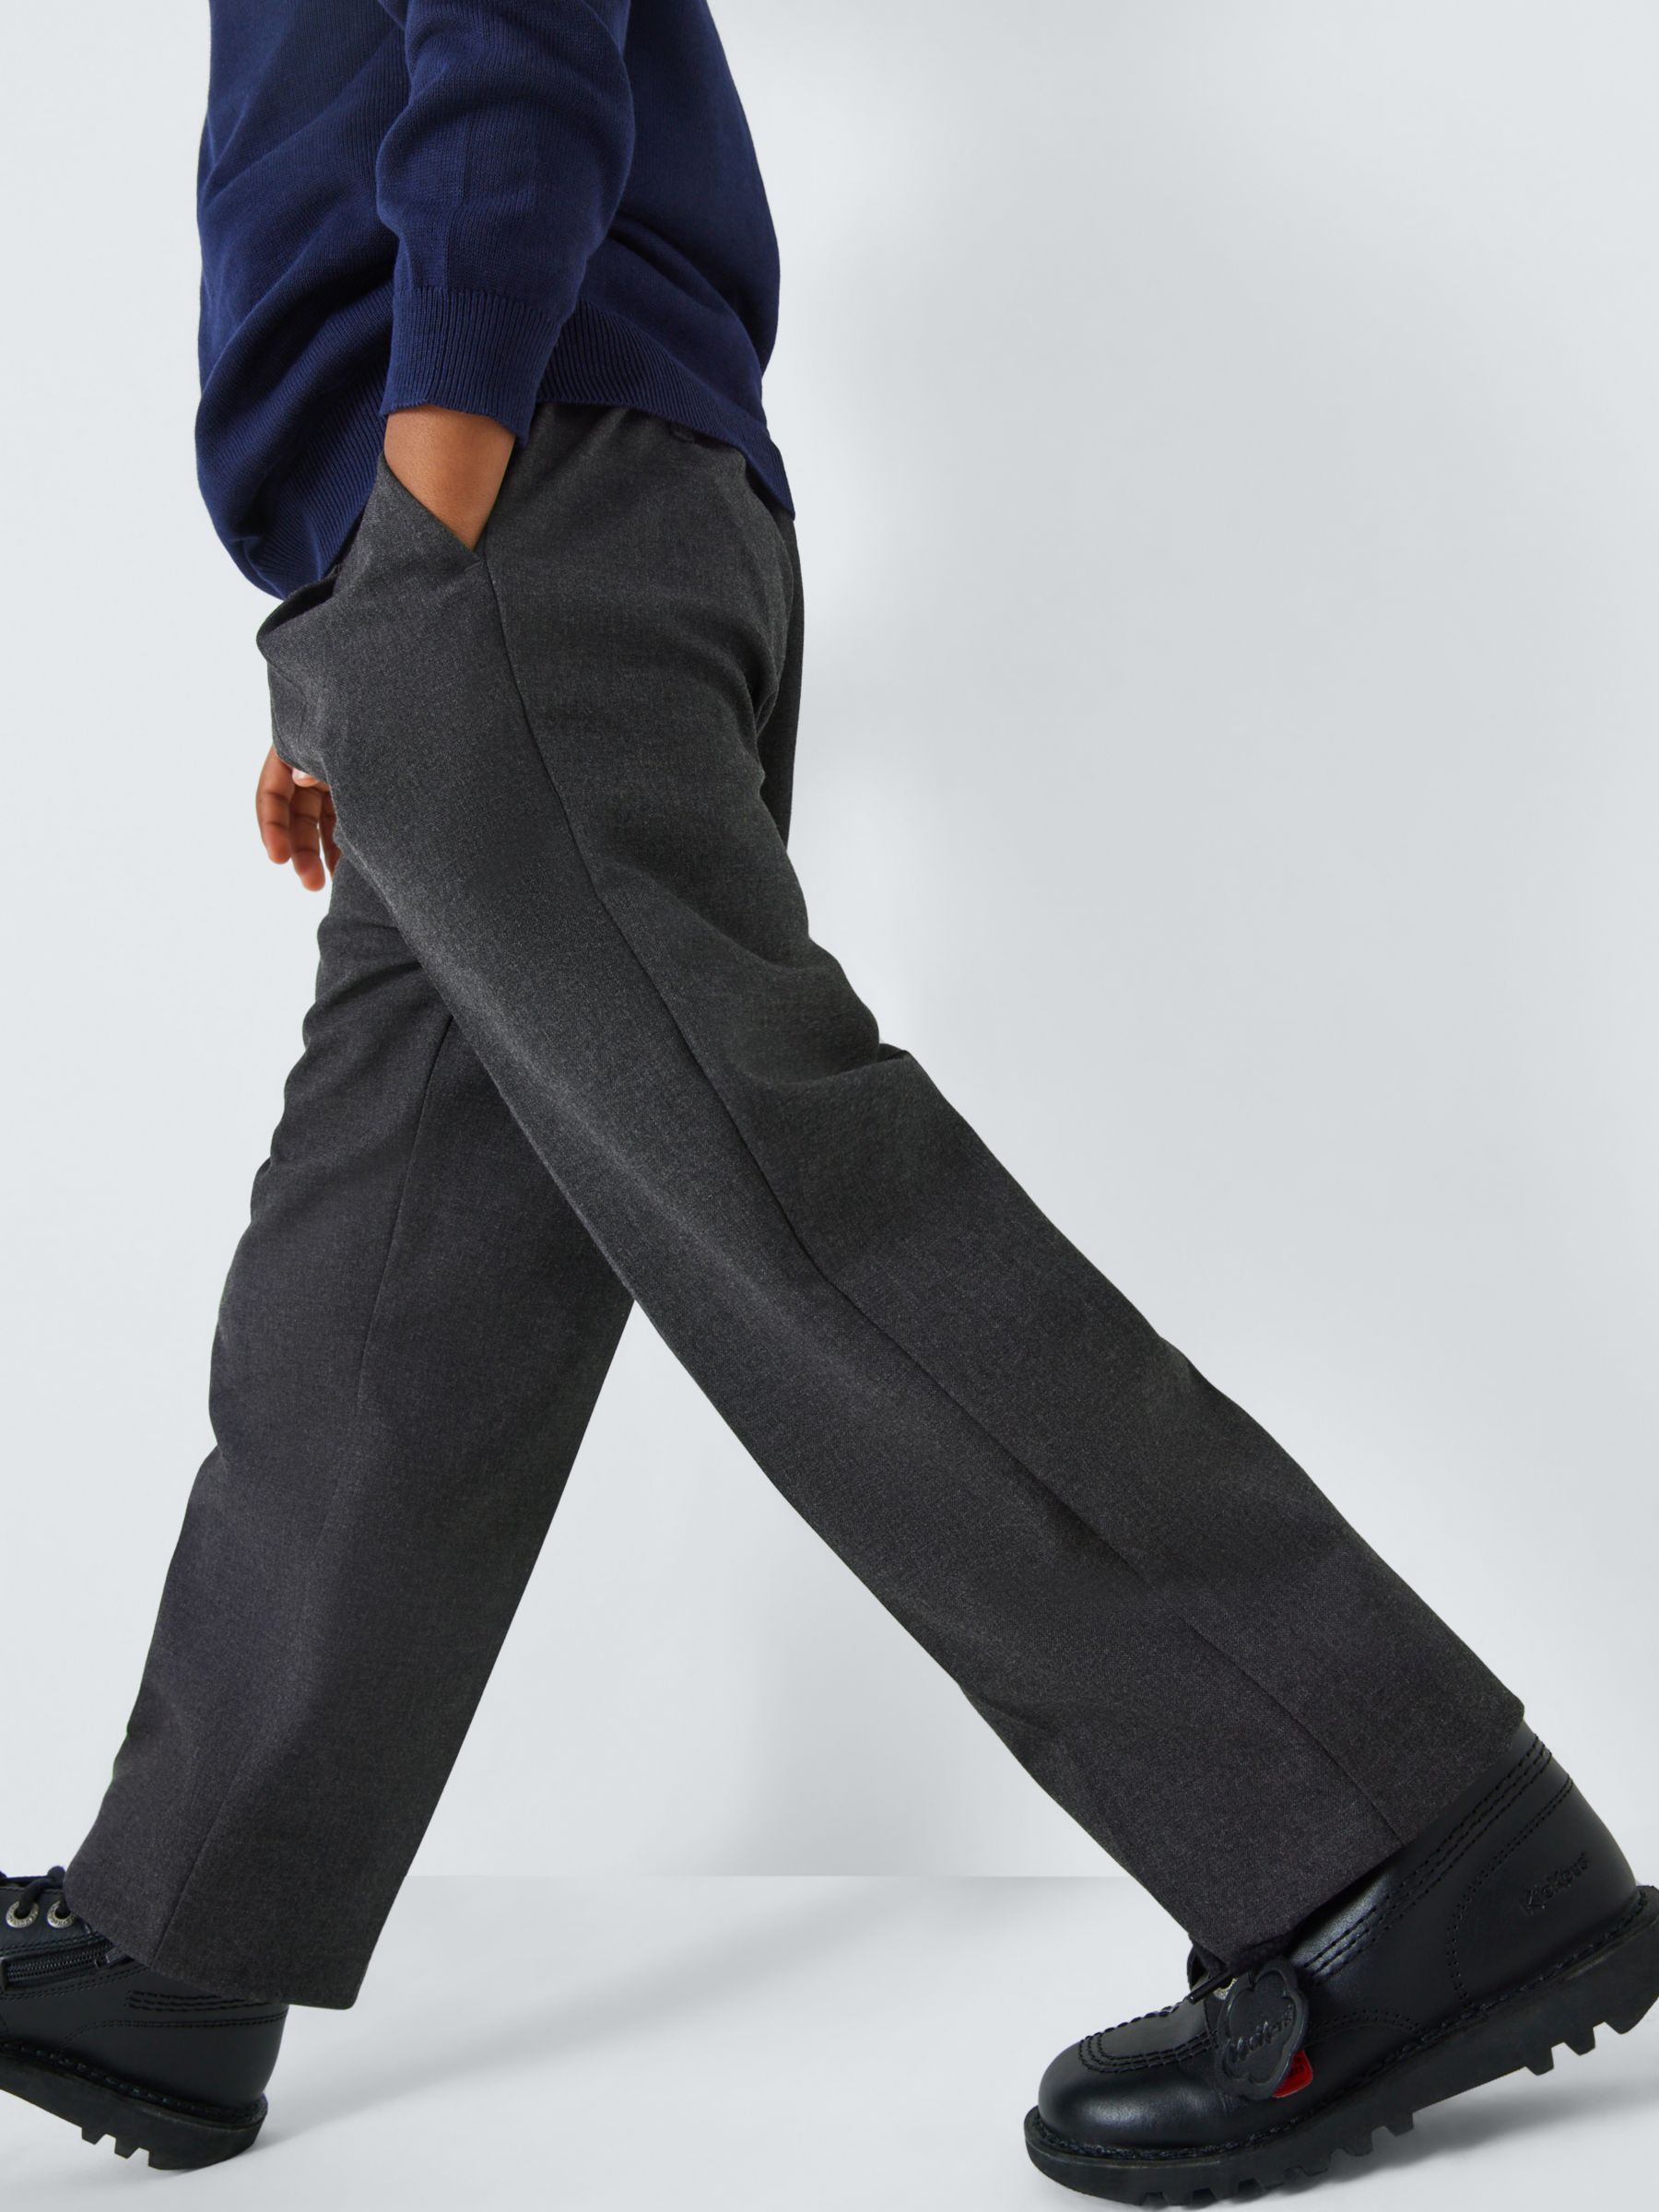 Buy John Lewis ANYDAY Adjustable Waist Boys' School Trousers, Pack of 2 Online at johnlewis.com